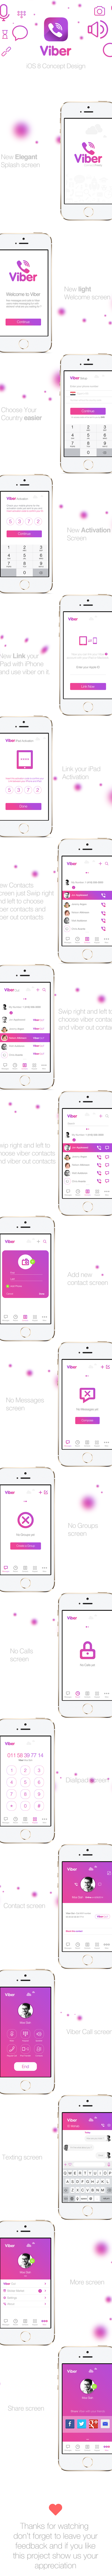 viber app apps mobile ios ios8 ios7 moeslah MOE slah UI ux redesign design flat